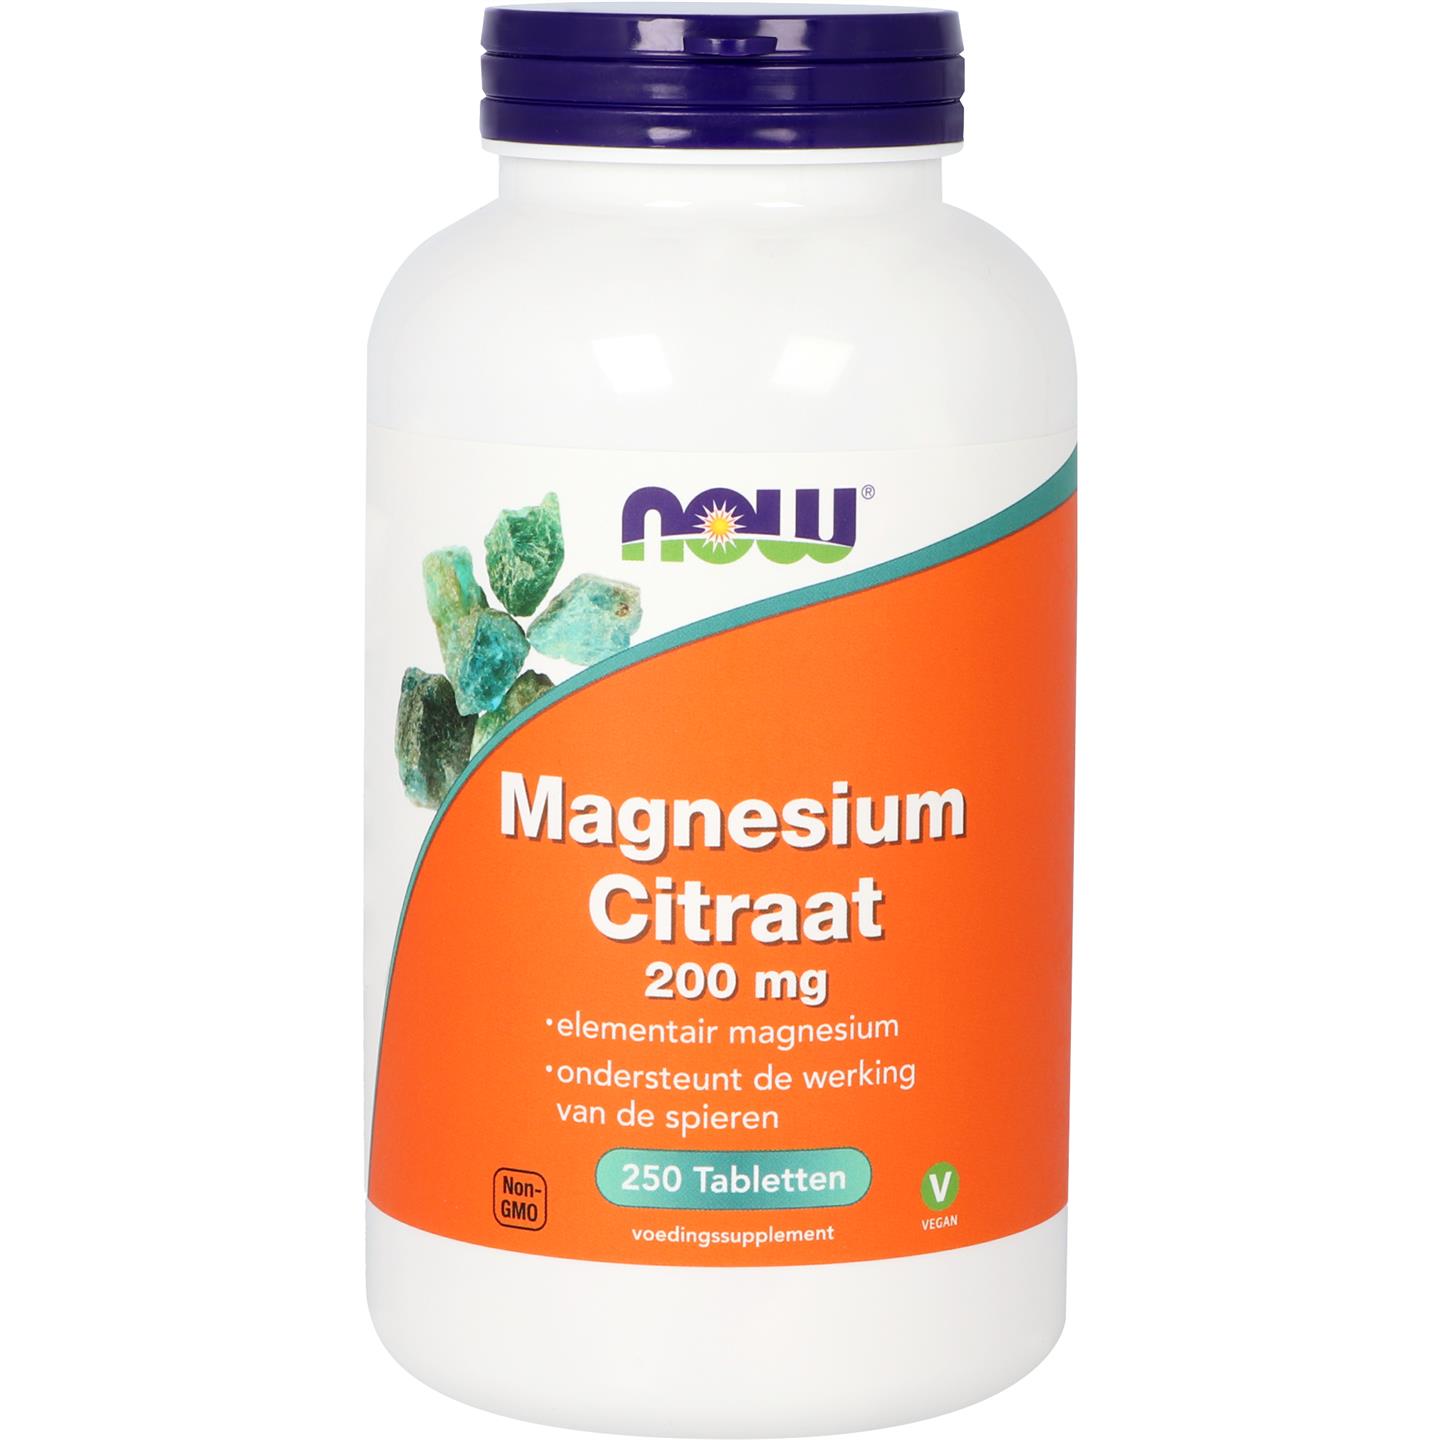 Magnesium Citraat 200 mg